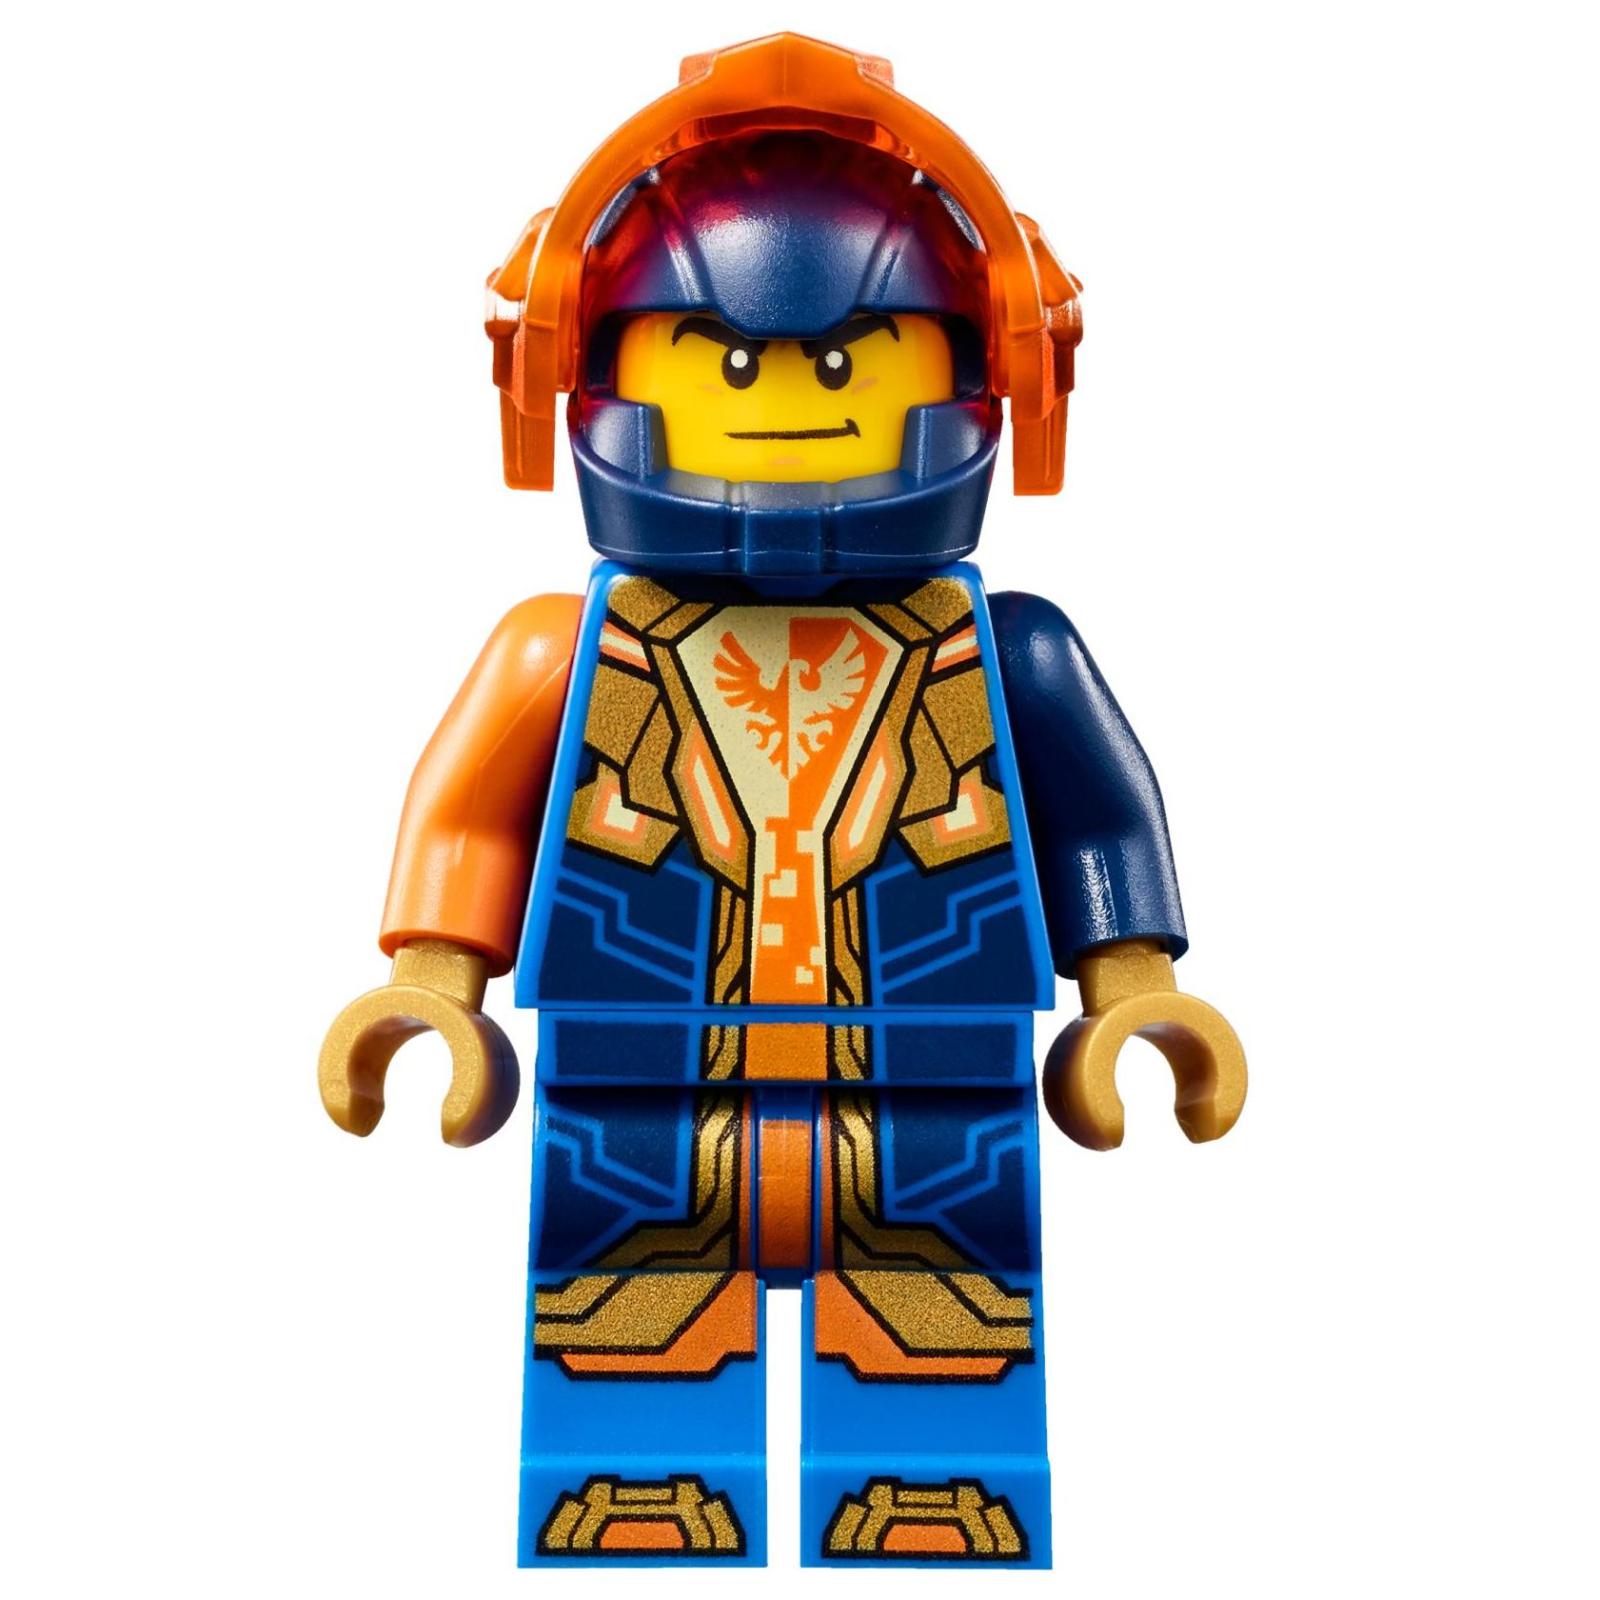 Конструктор LEGO Nexo Knights Бой техномагов (72004) изображение 9